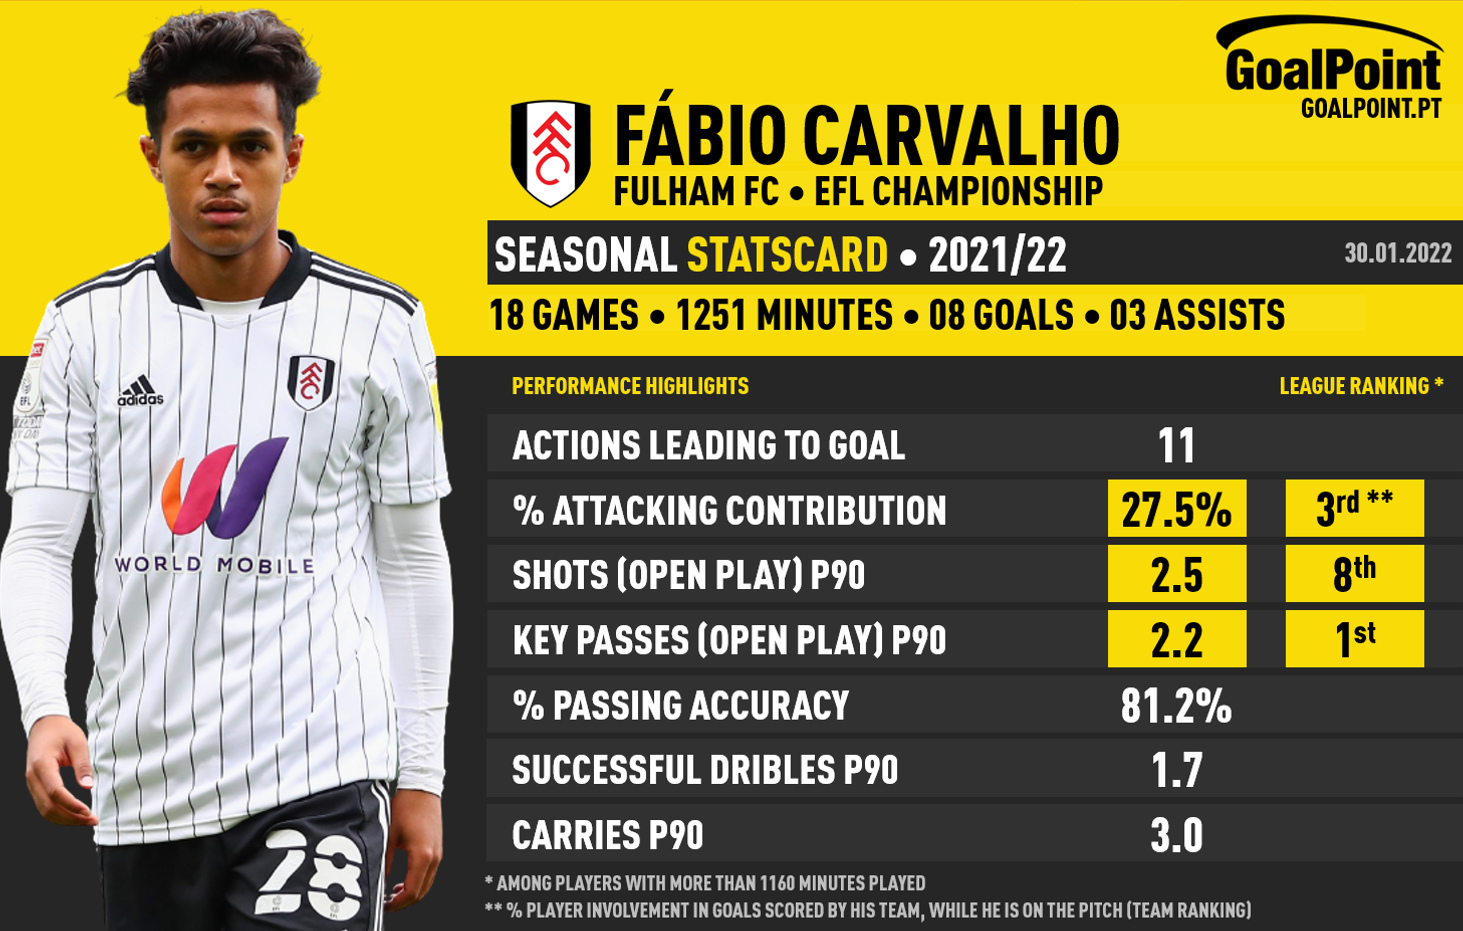 GoalPoint-Fábio-Carvalho-Fulham-StatCard-EFL-Championship-202122-27.01.2021-1-infog